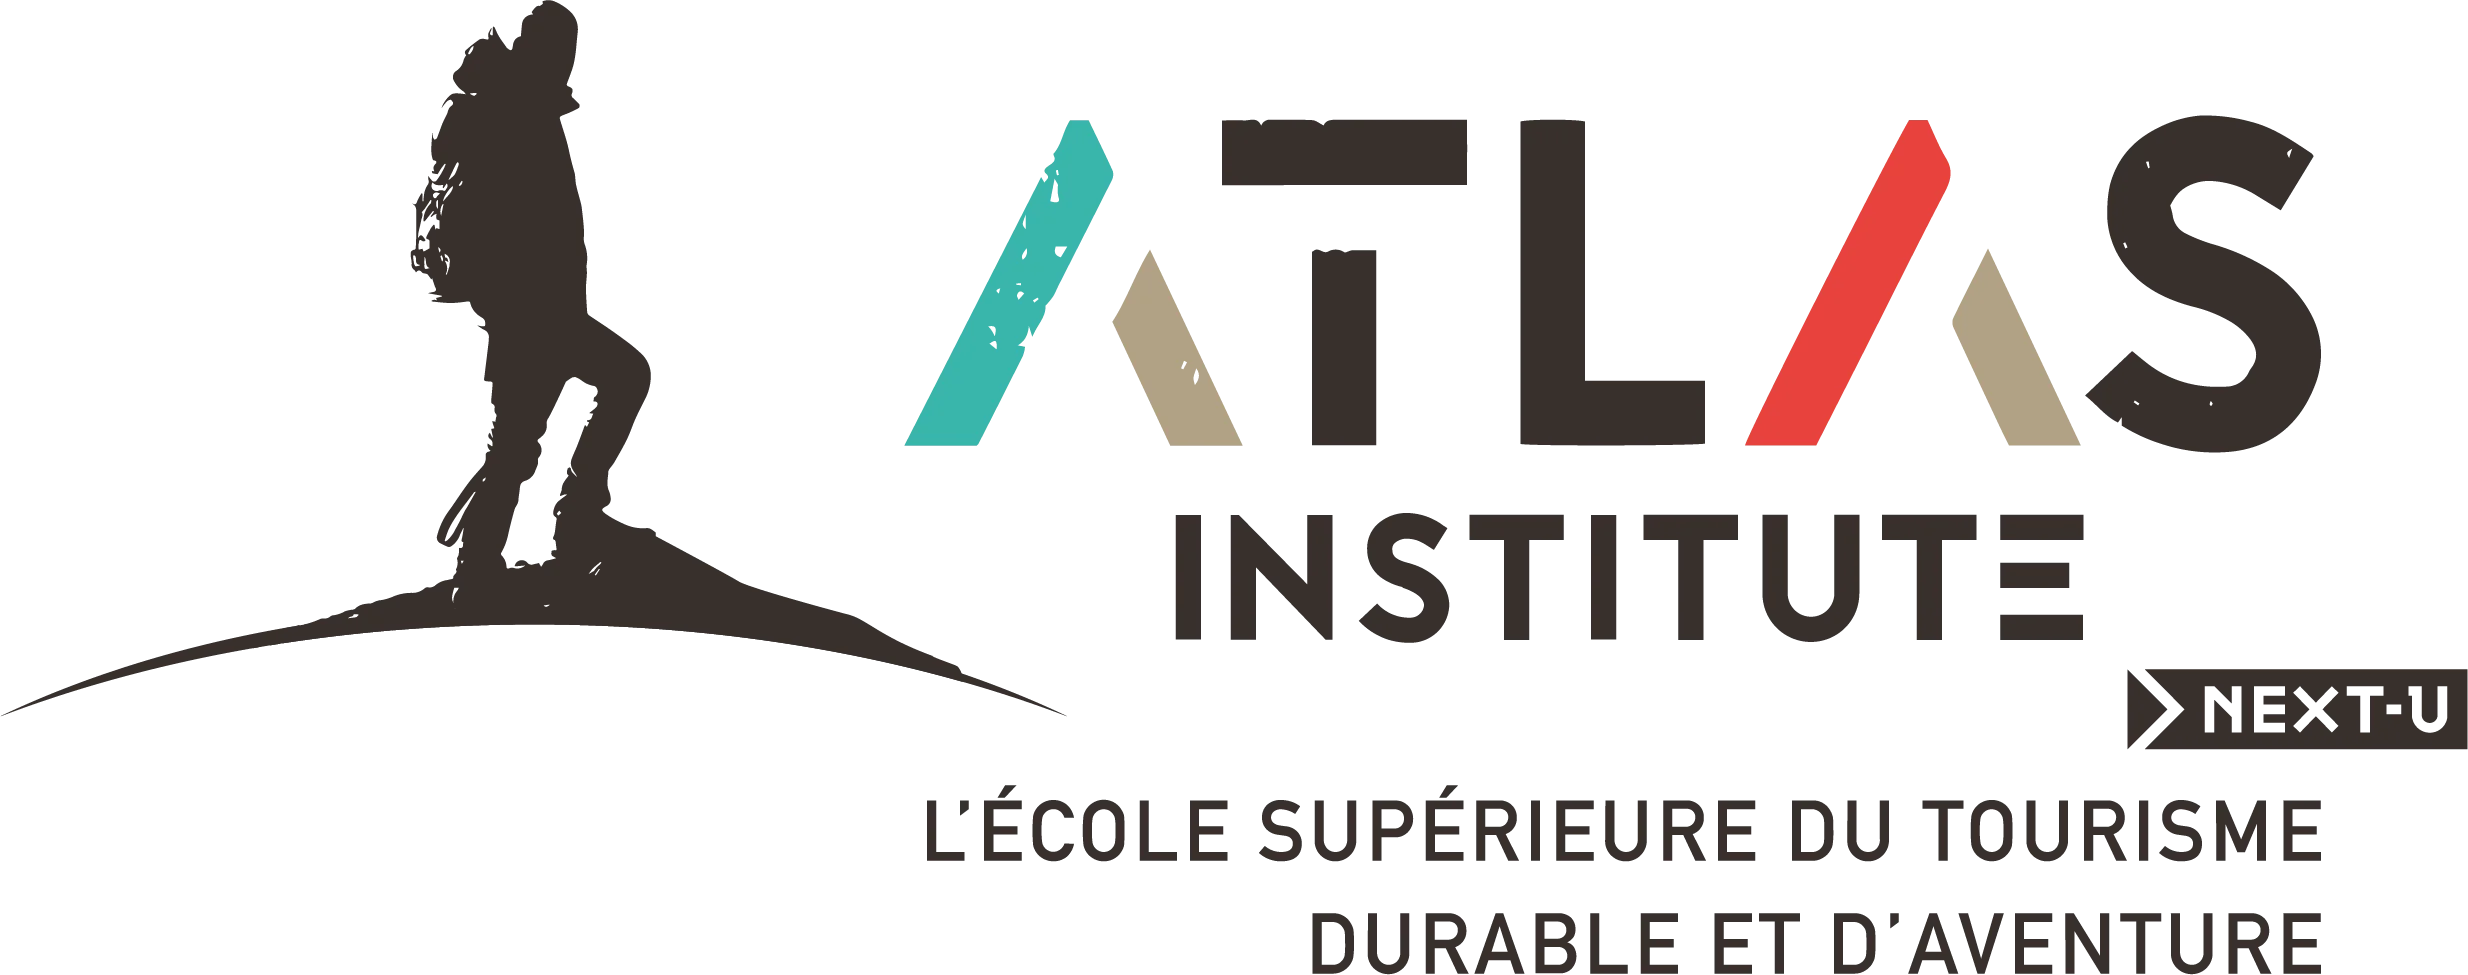 logo ecole Atlas